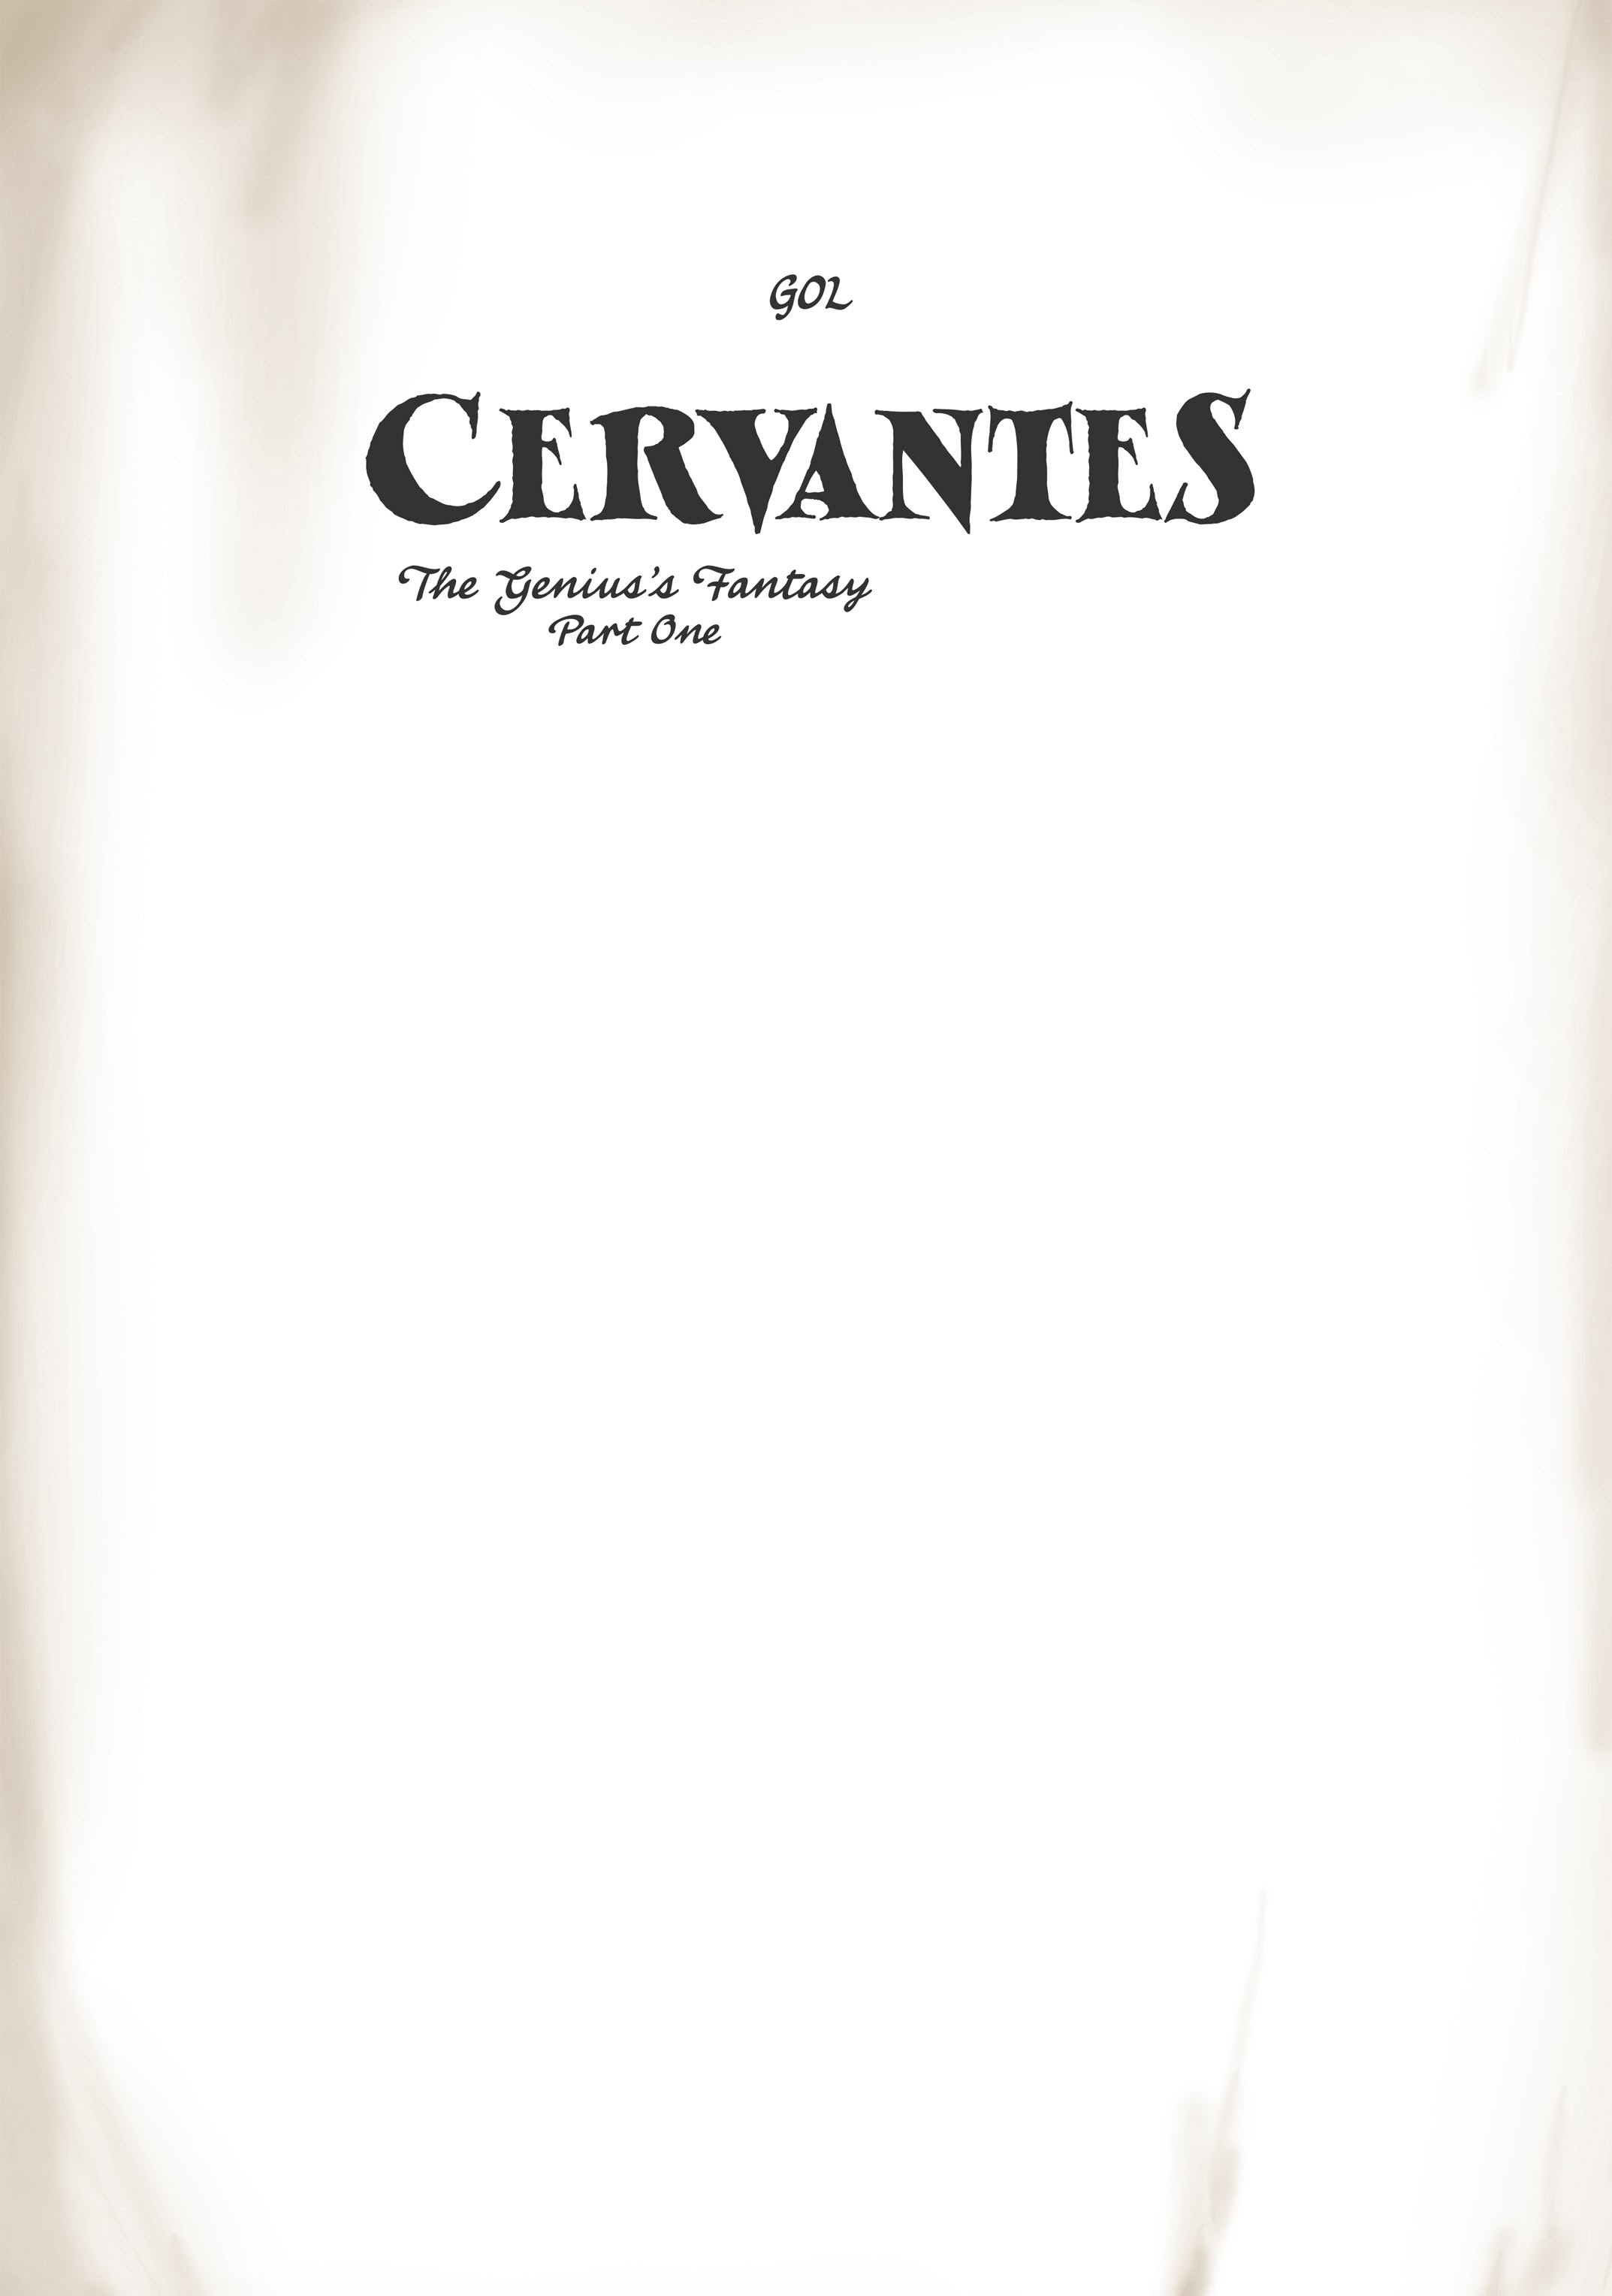 Read online Cervantes comic -  Issue # TPB 1 - 3